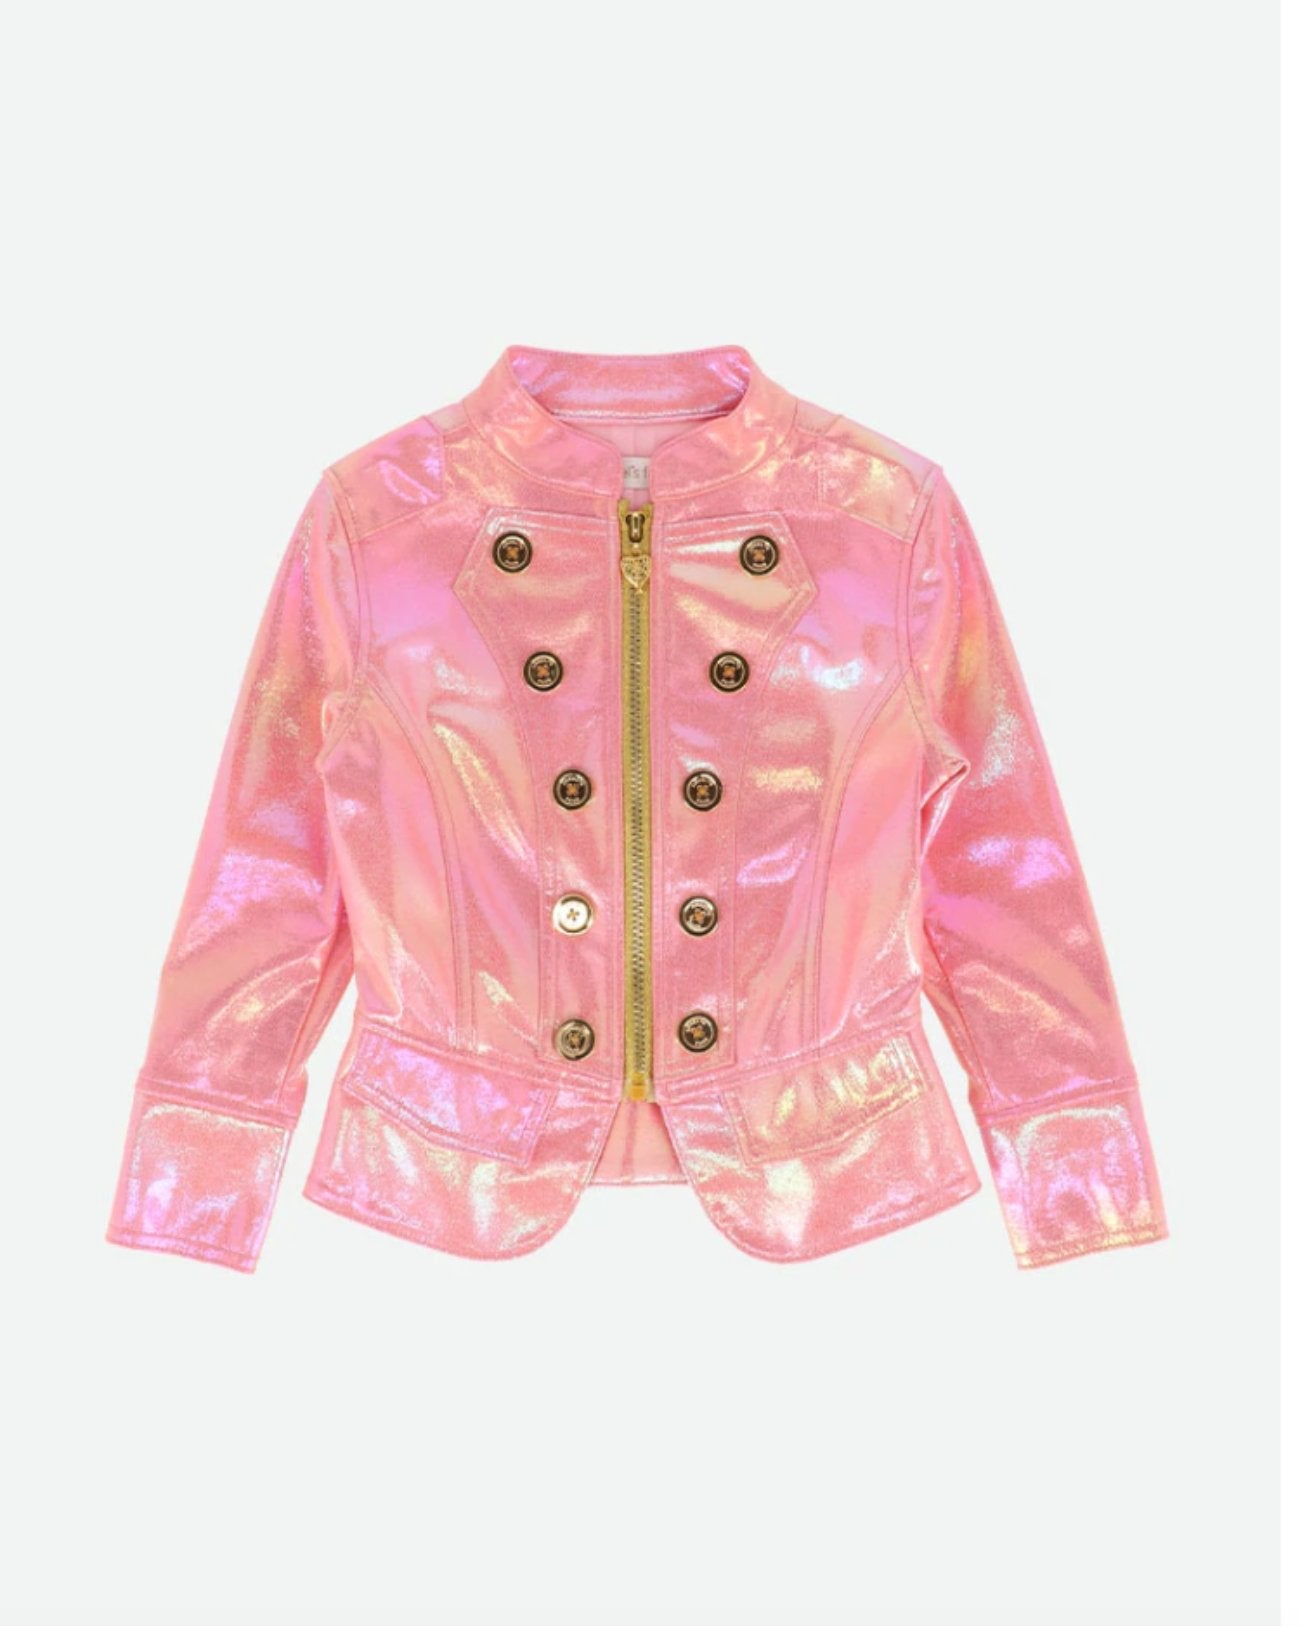 Angel's Face Girls Leanne Pink Iridescent Jacket